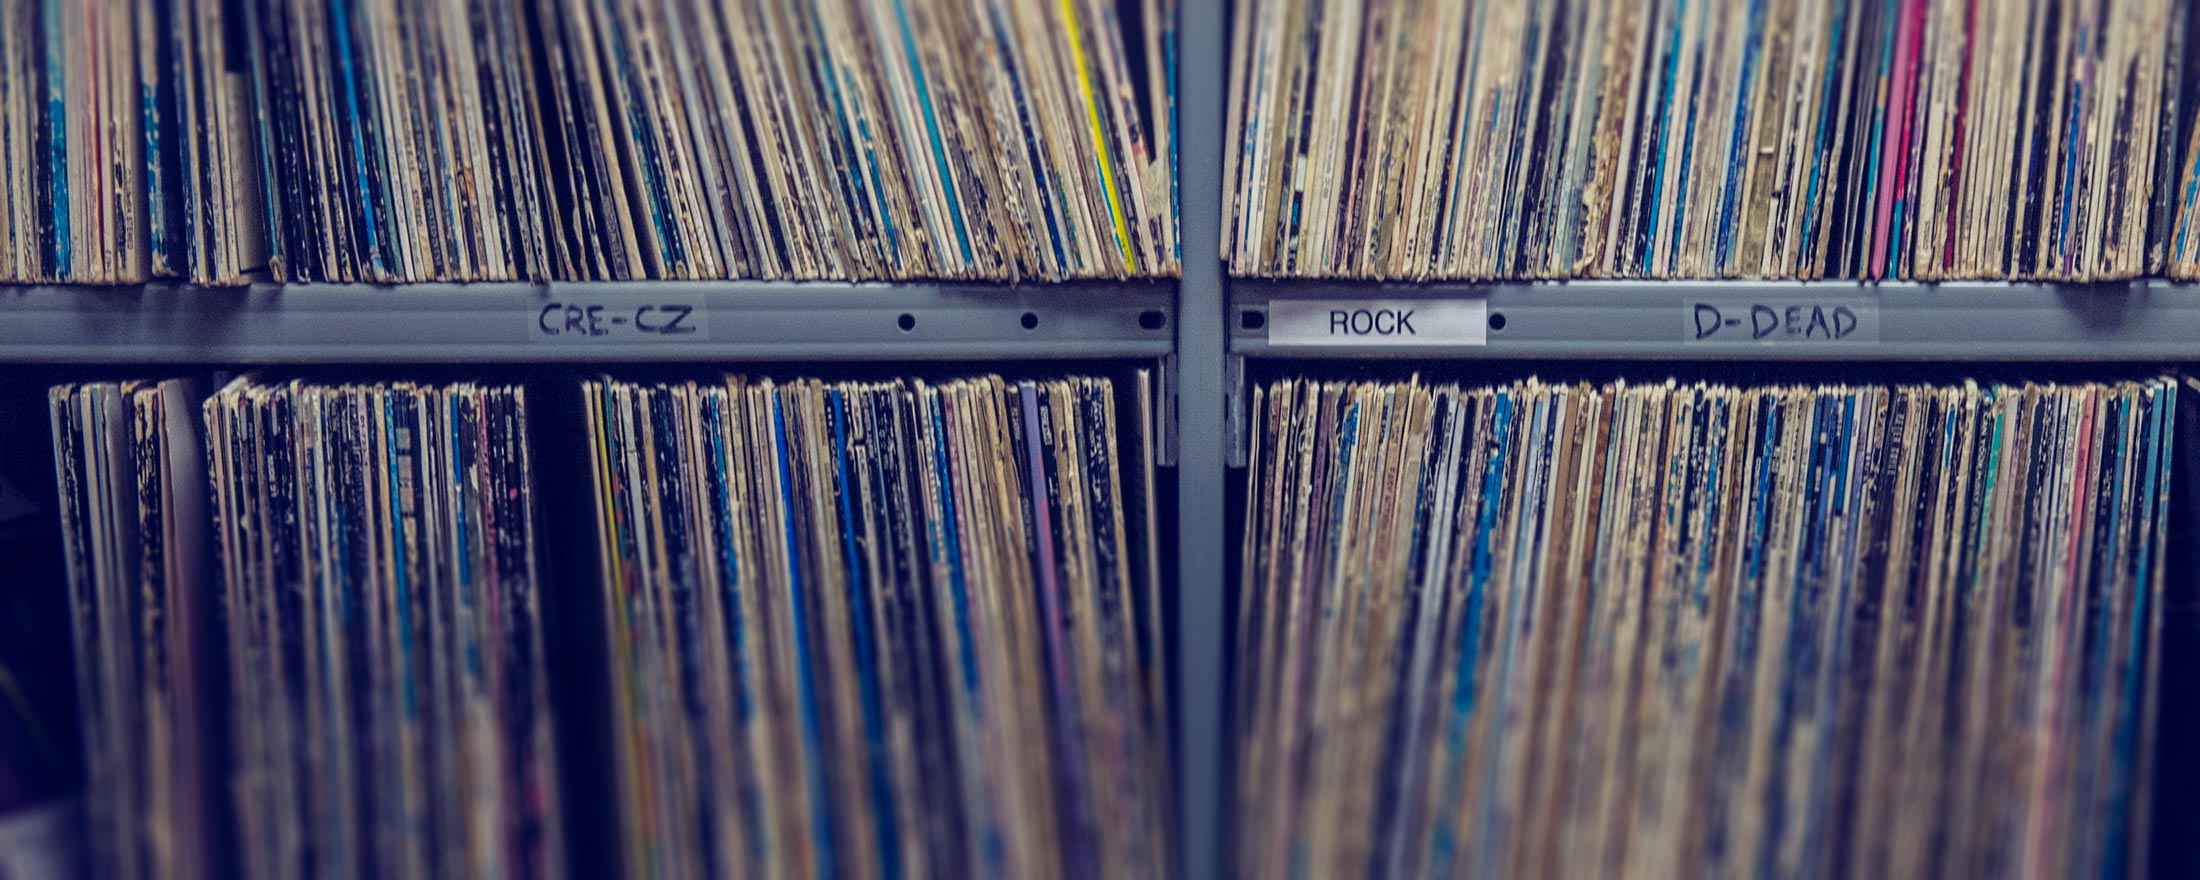 Vinyl records on metal bookshelves